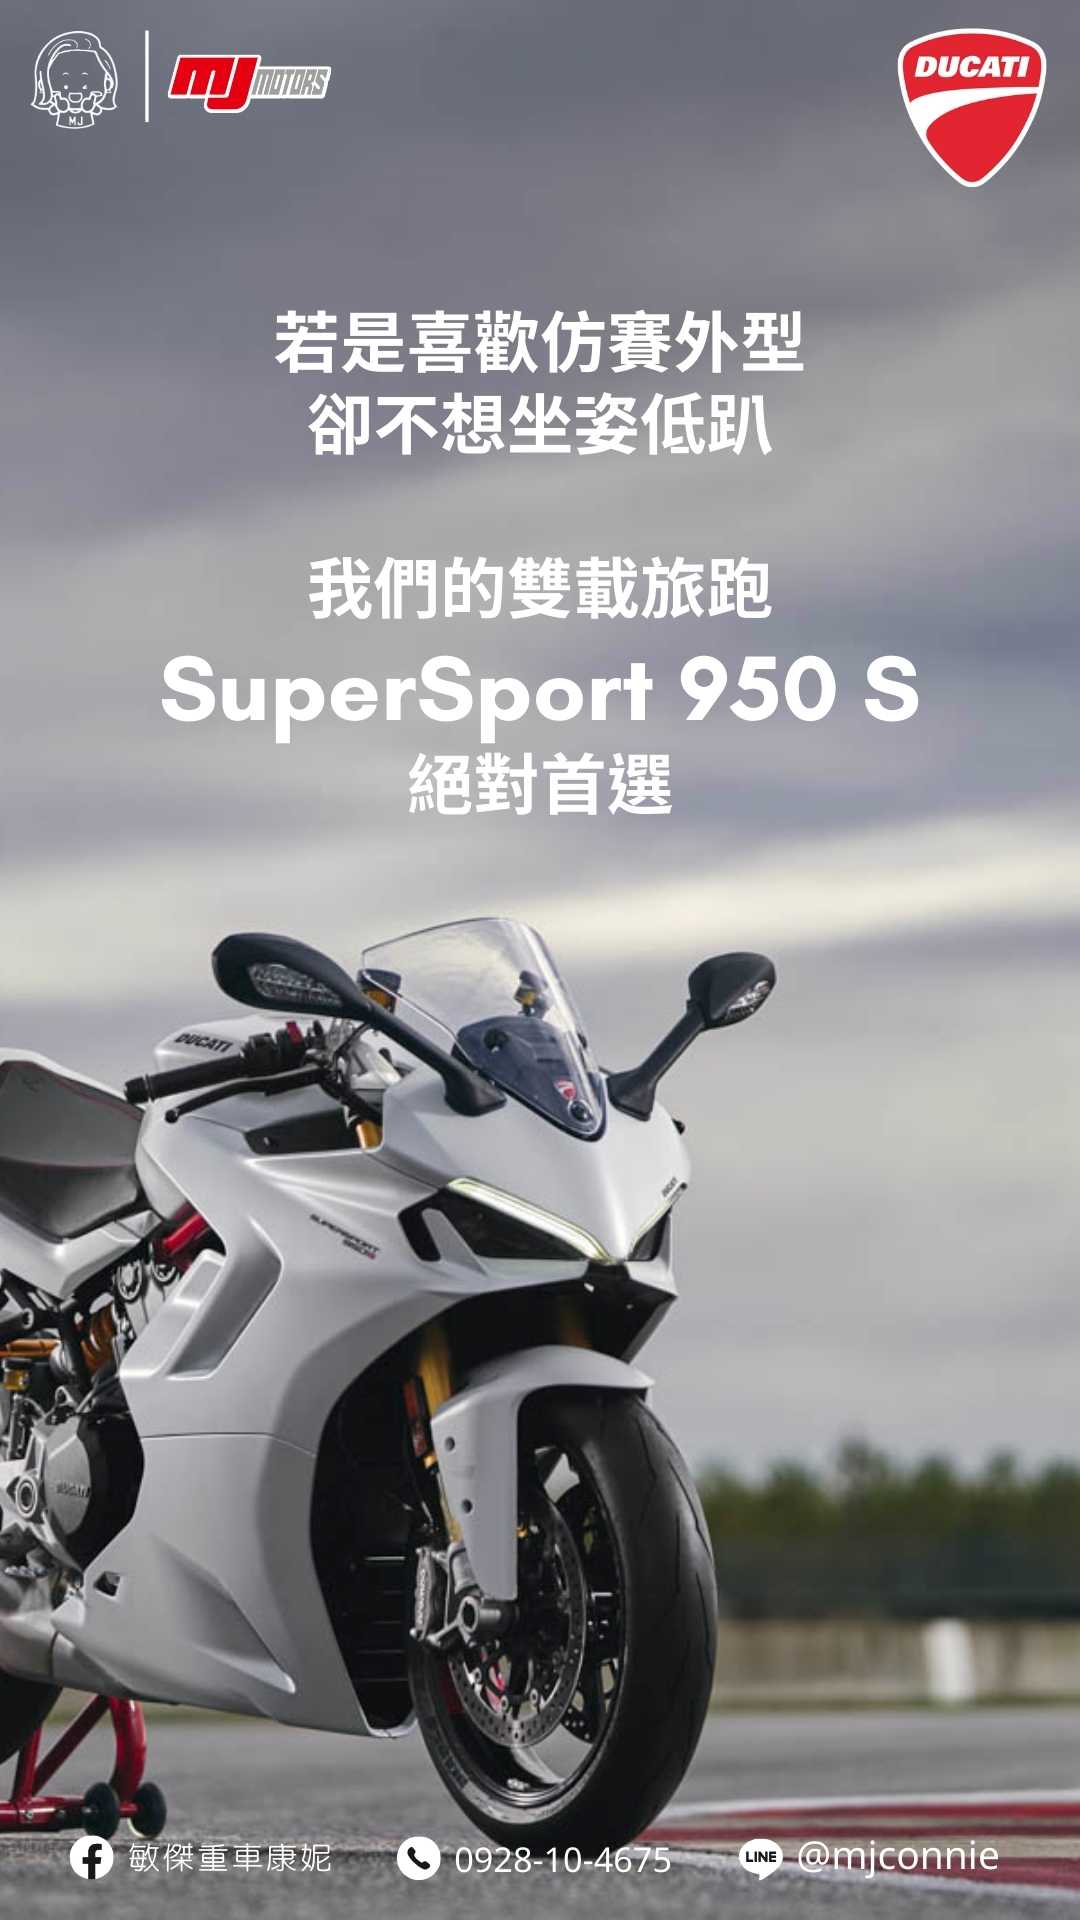 DUCATI SuperSport S新車出售中 『敏傑康妮』Ducati SuperSport S 指定年式~全額72期零利率~~好康優惠趁現在!!售價99.8萬元 | 敏傑車業資深銷售專員 康妮 Connie